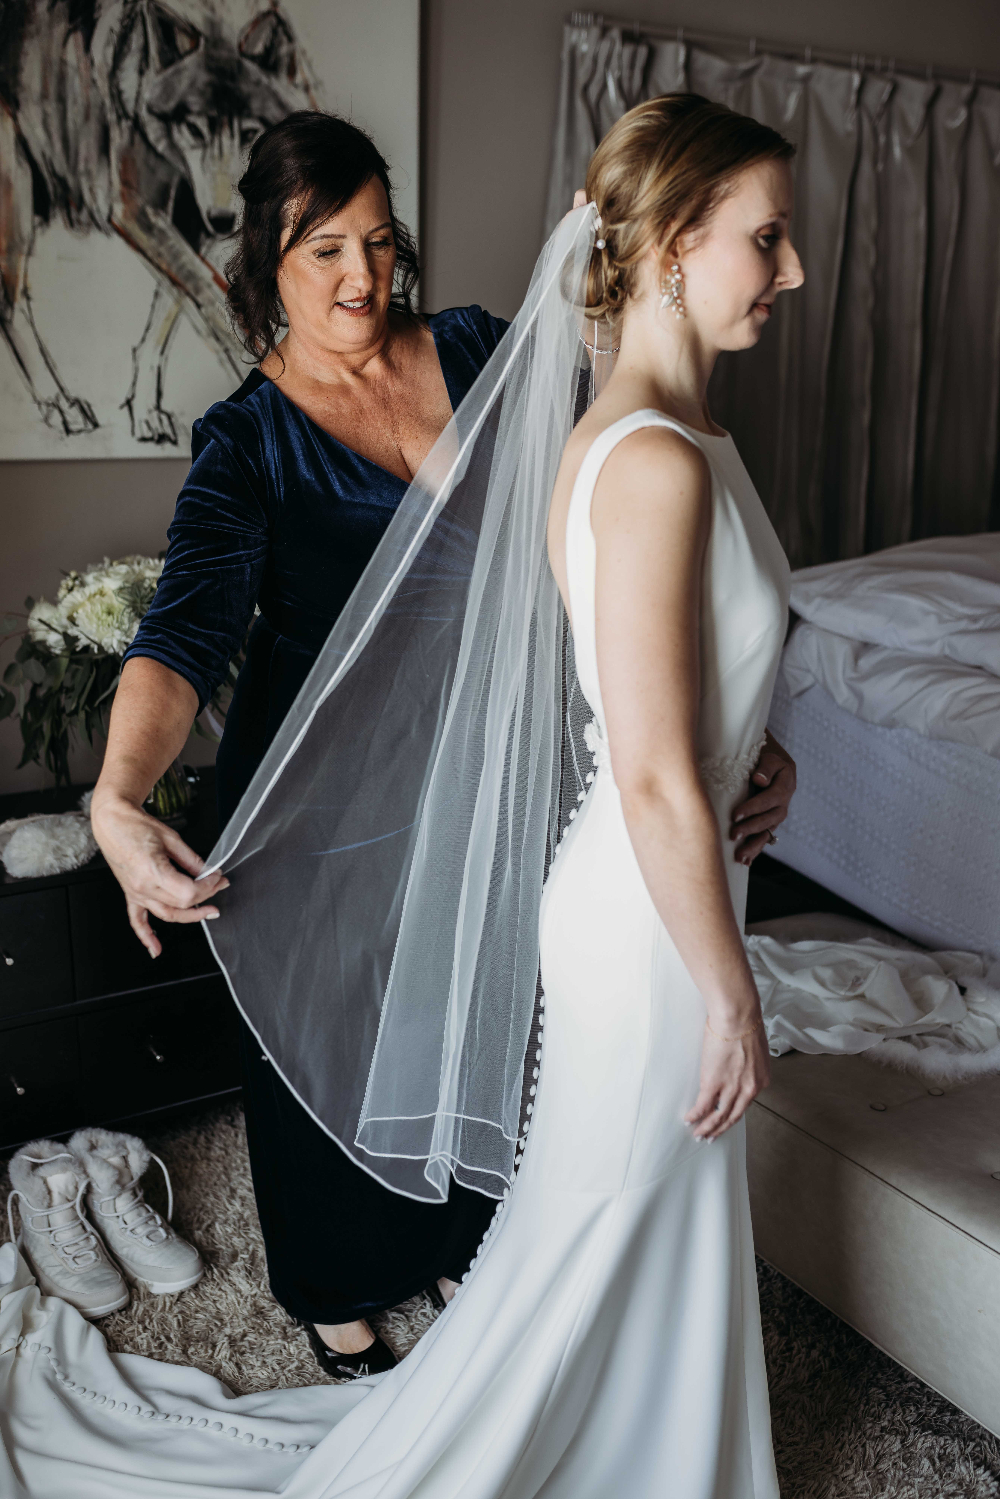 mom fixing bridal veil